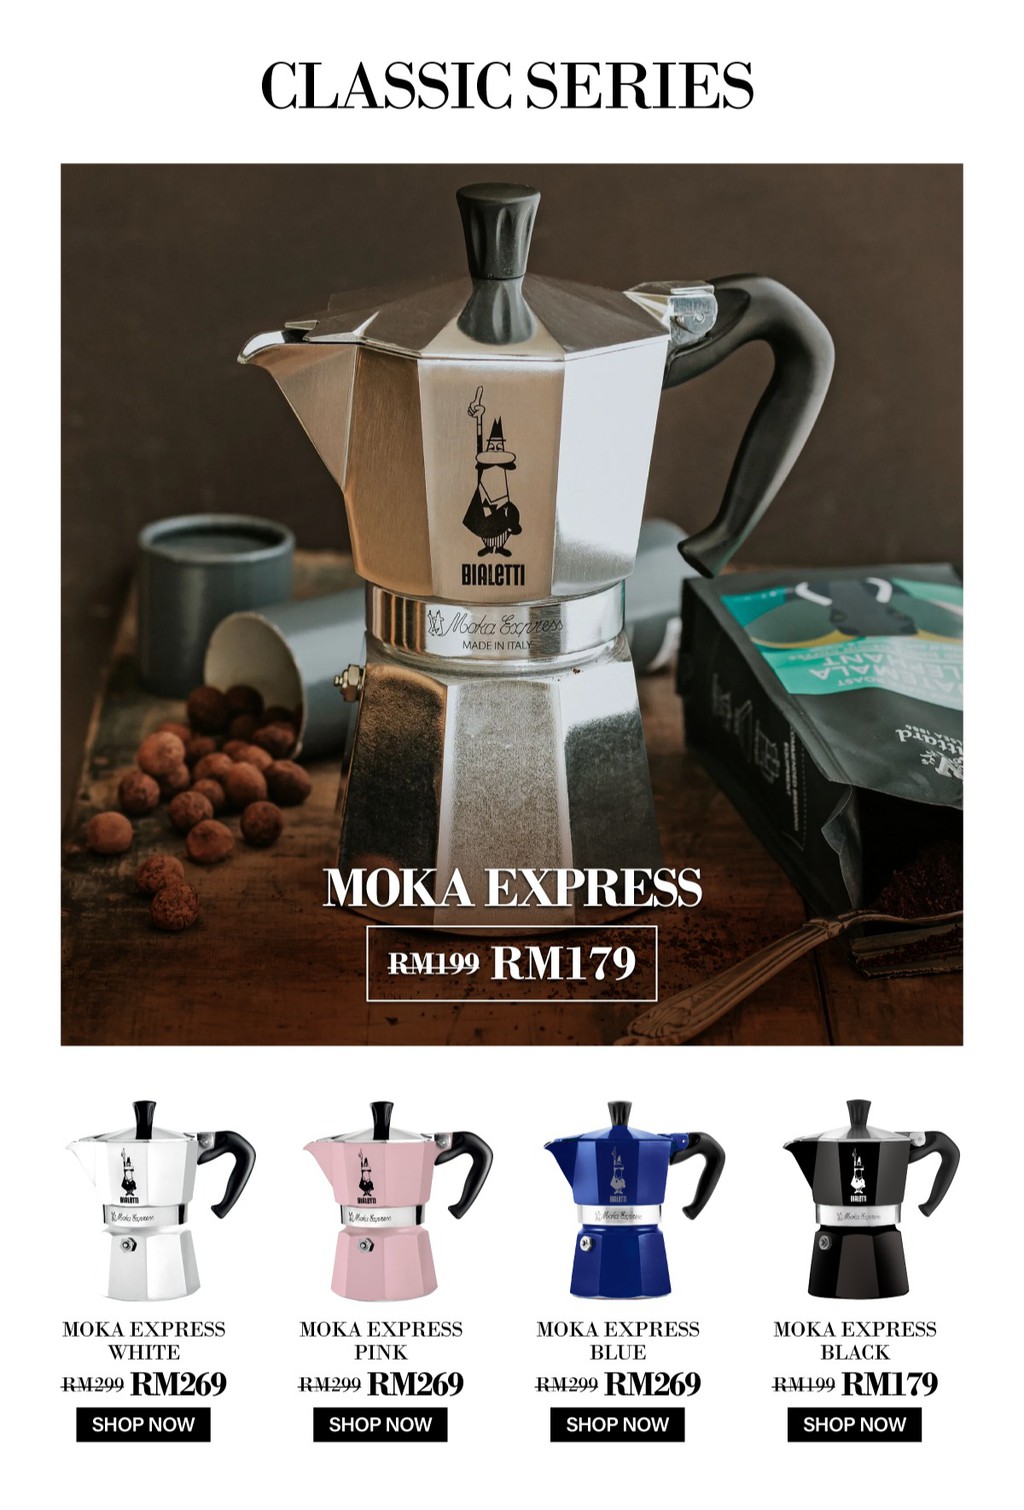 Bialetti Rainbow Italian Moka Espresso Stovetop Coffee Maker Pot 3